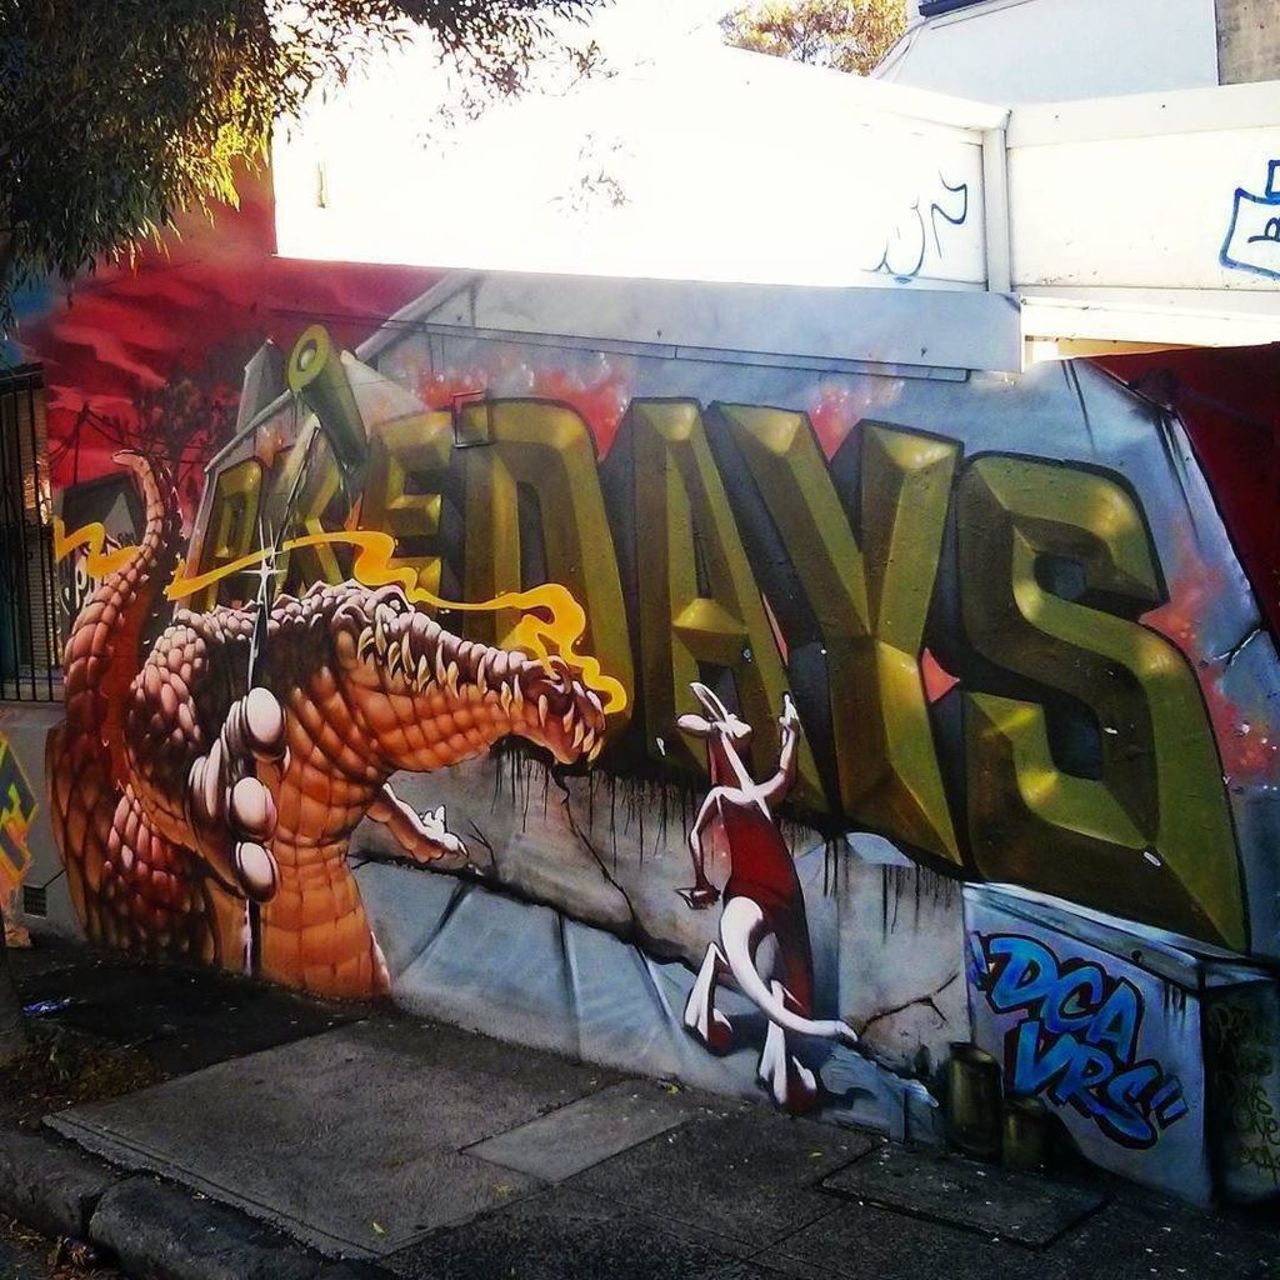 Pikedays? #ifttt #sydney #croc #sydneygraffiti #newtown #rsa_graffiti #arteurbano #streetart #graffiti #graffiso https://t.co/Bk5Q3V8e7c